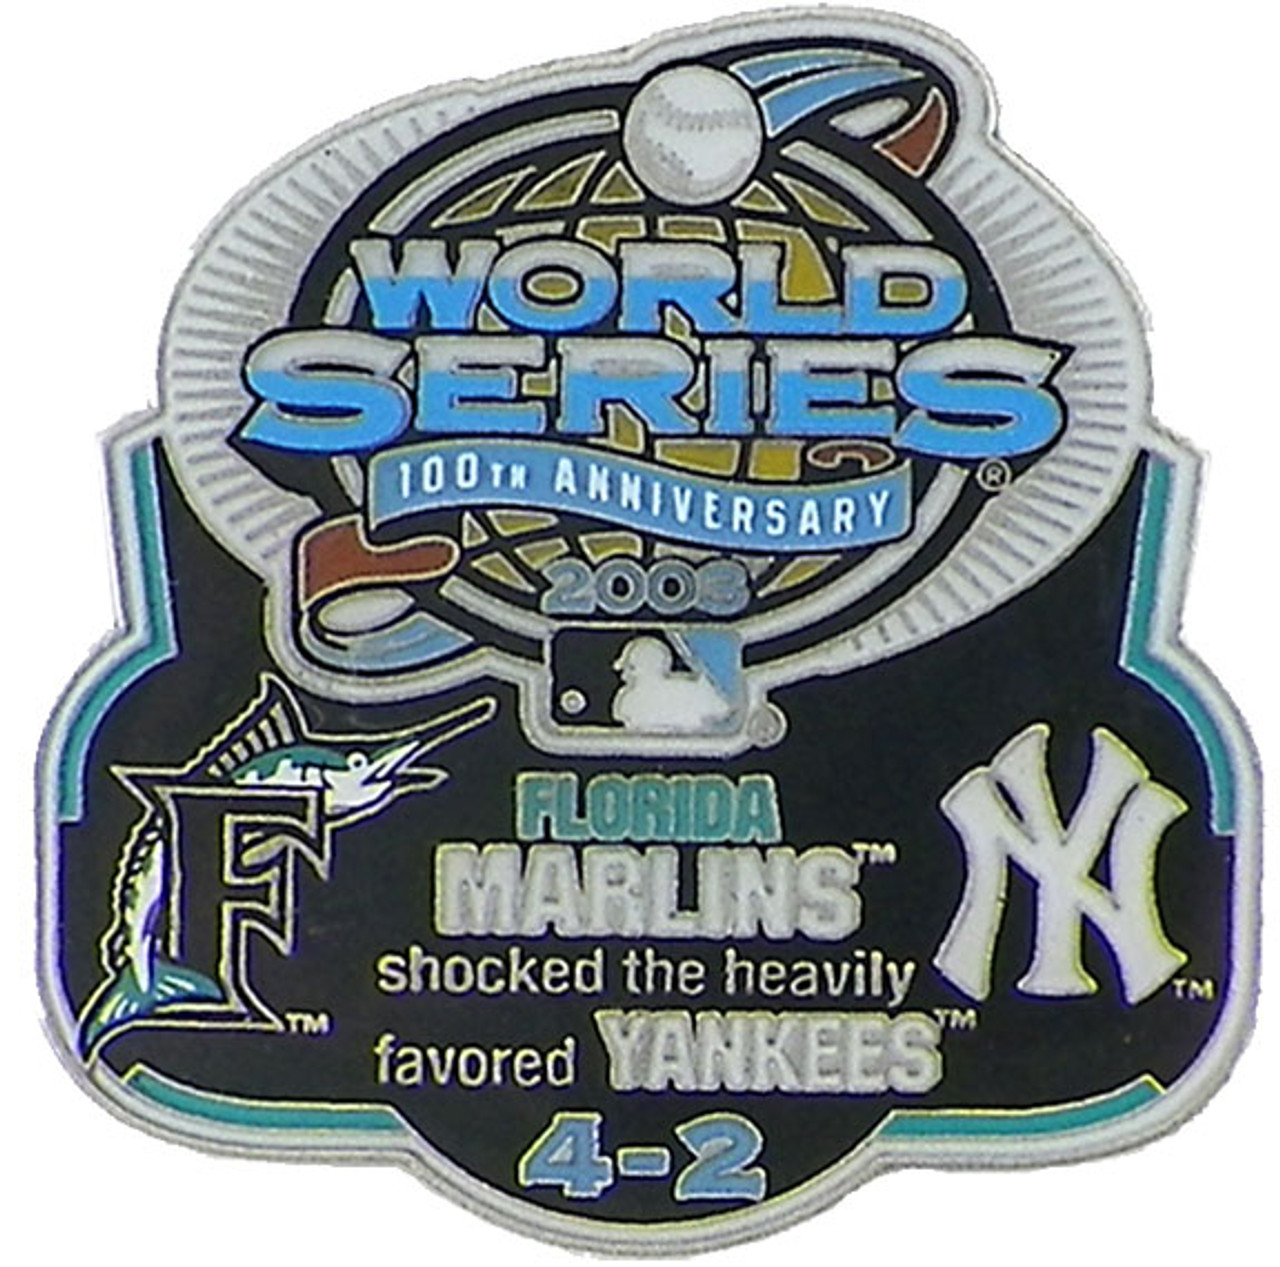 2003 world series